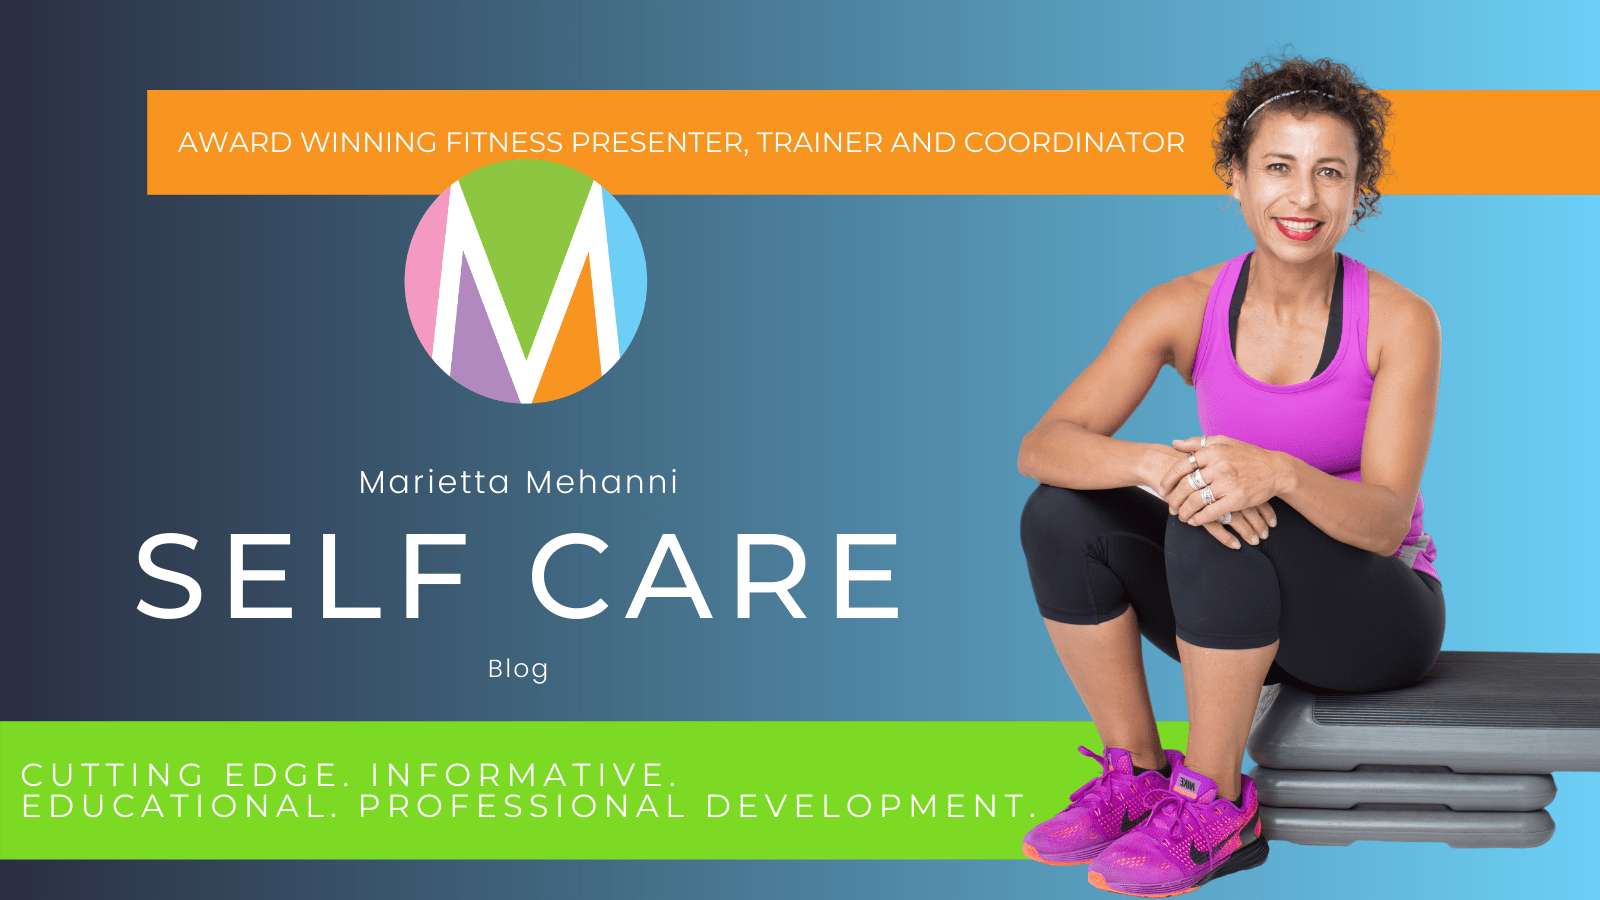 Marietta Mehanni blog self care marietta mehanni education professional development group fitness personal training informative fitness guru presenter